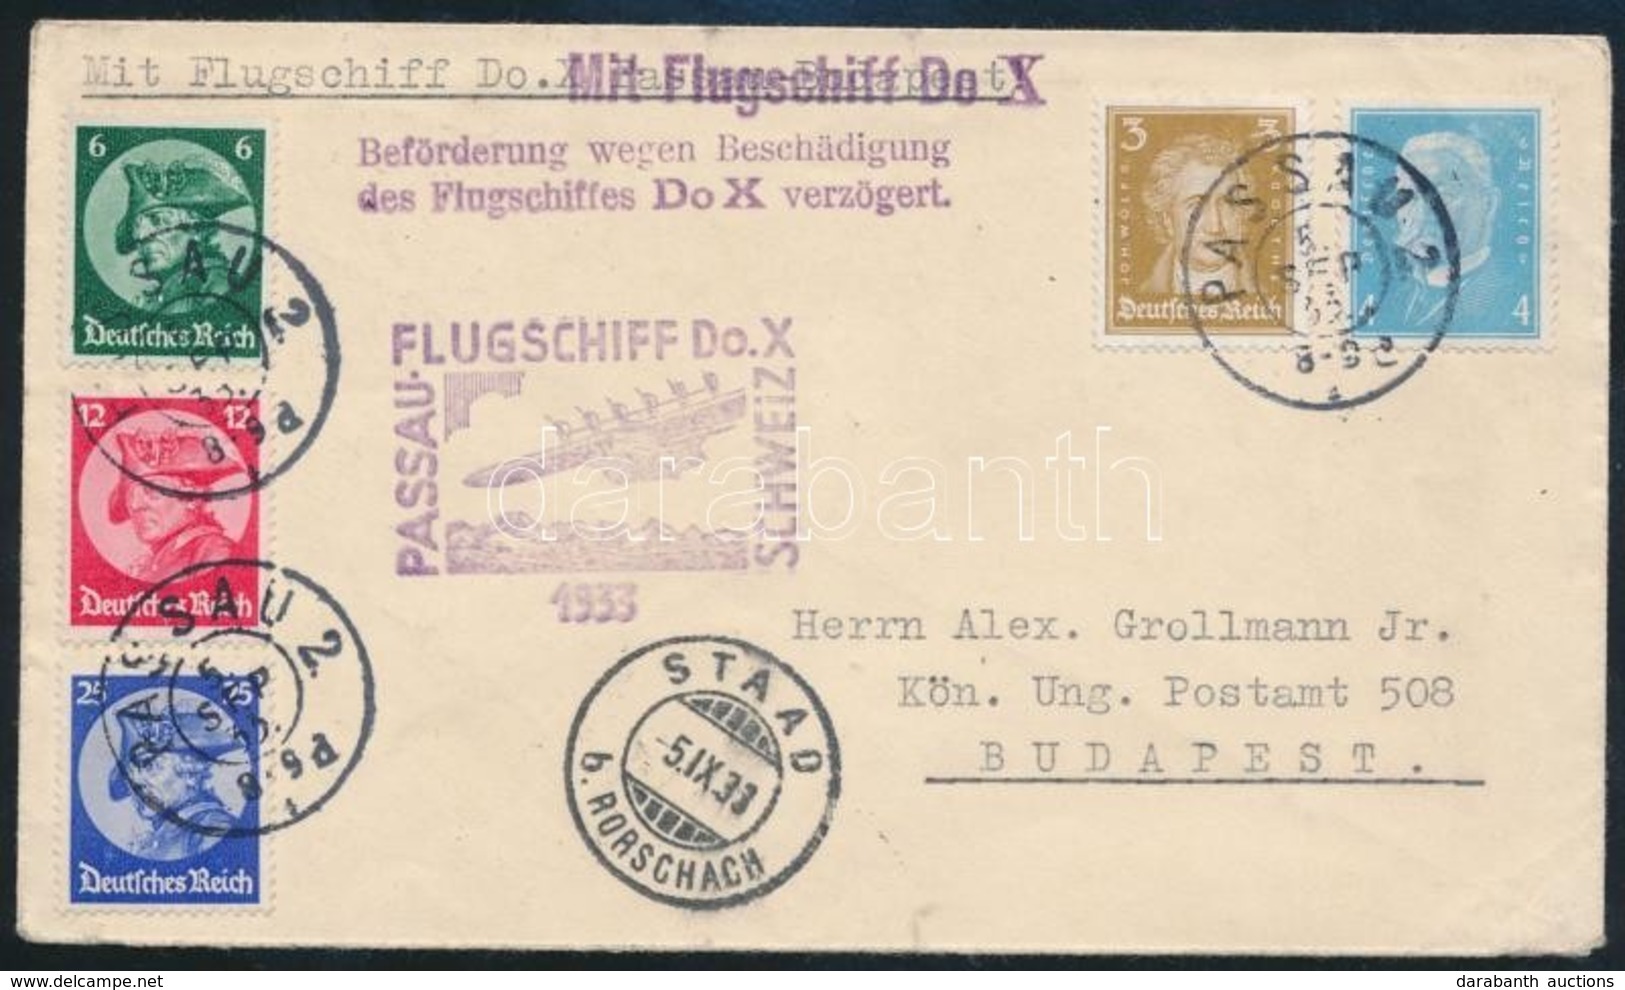 1933 A Dornier Do. X Elmaradt Budapesti Repülésére Feladott Levél / Cover Mailed For The Failed Passau-Budapest Flight - Other & Unclassified